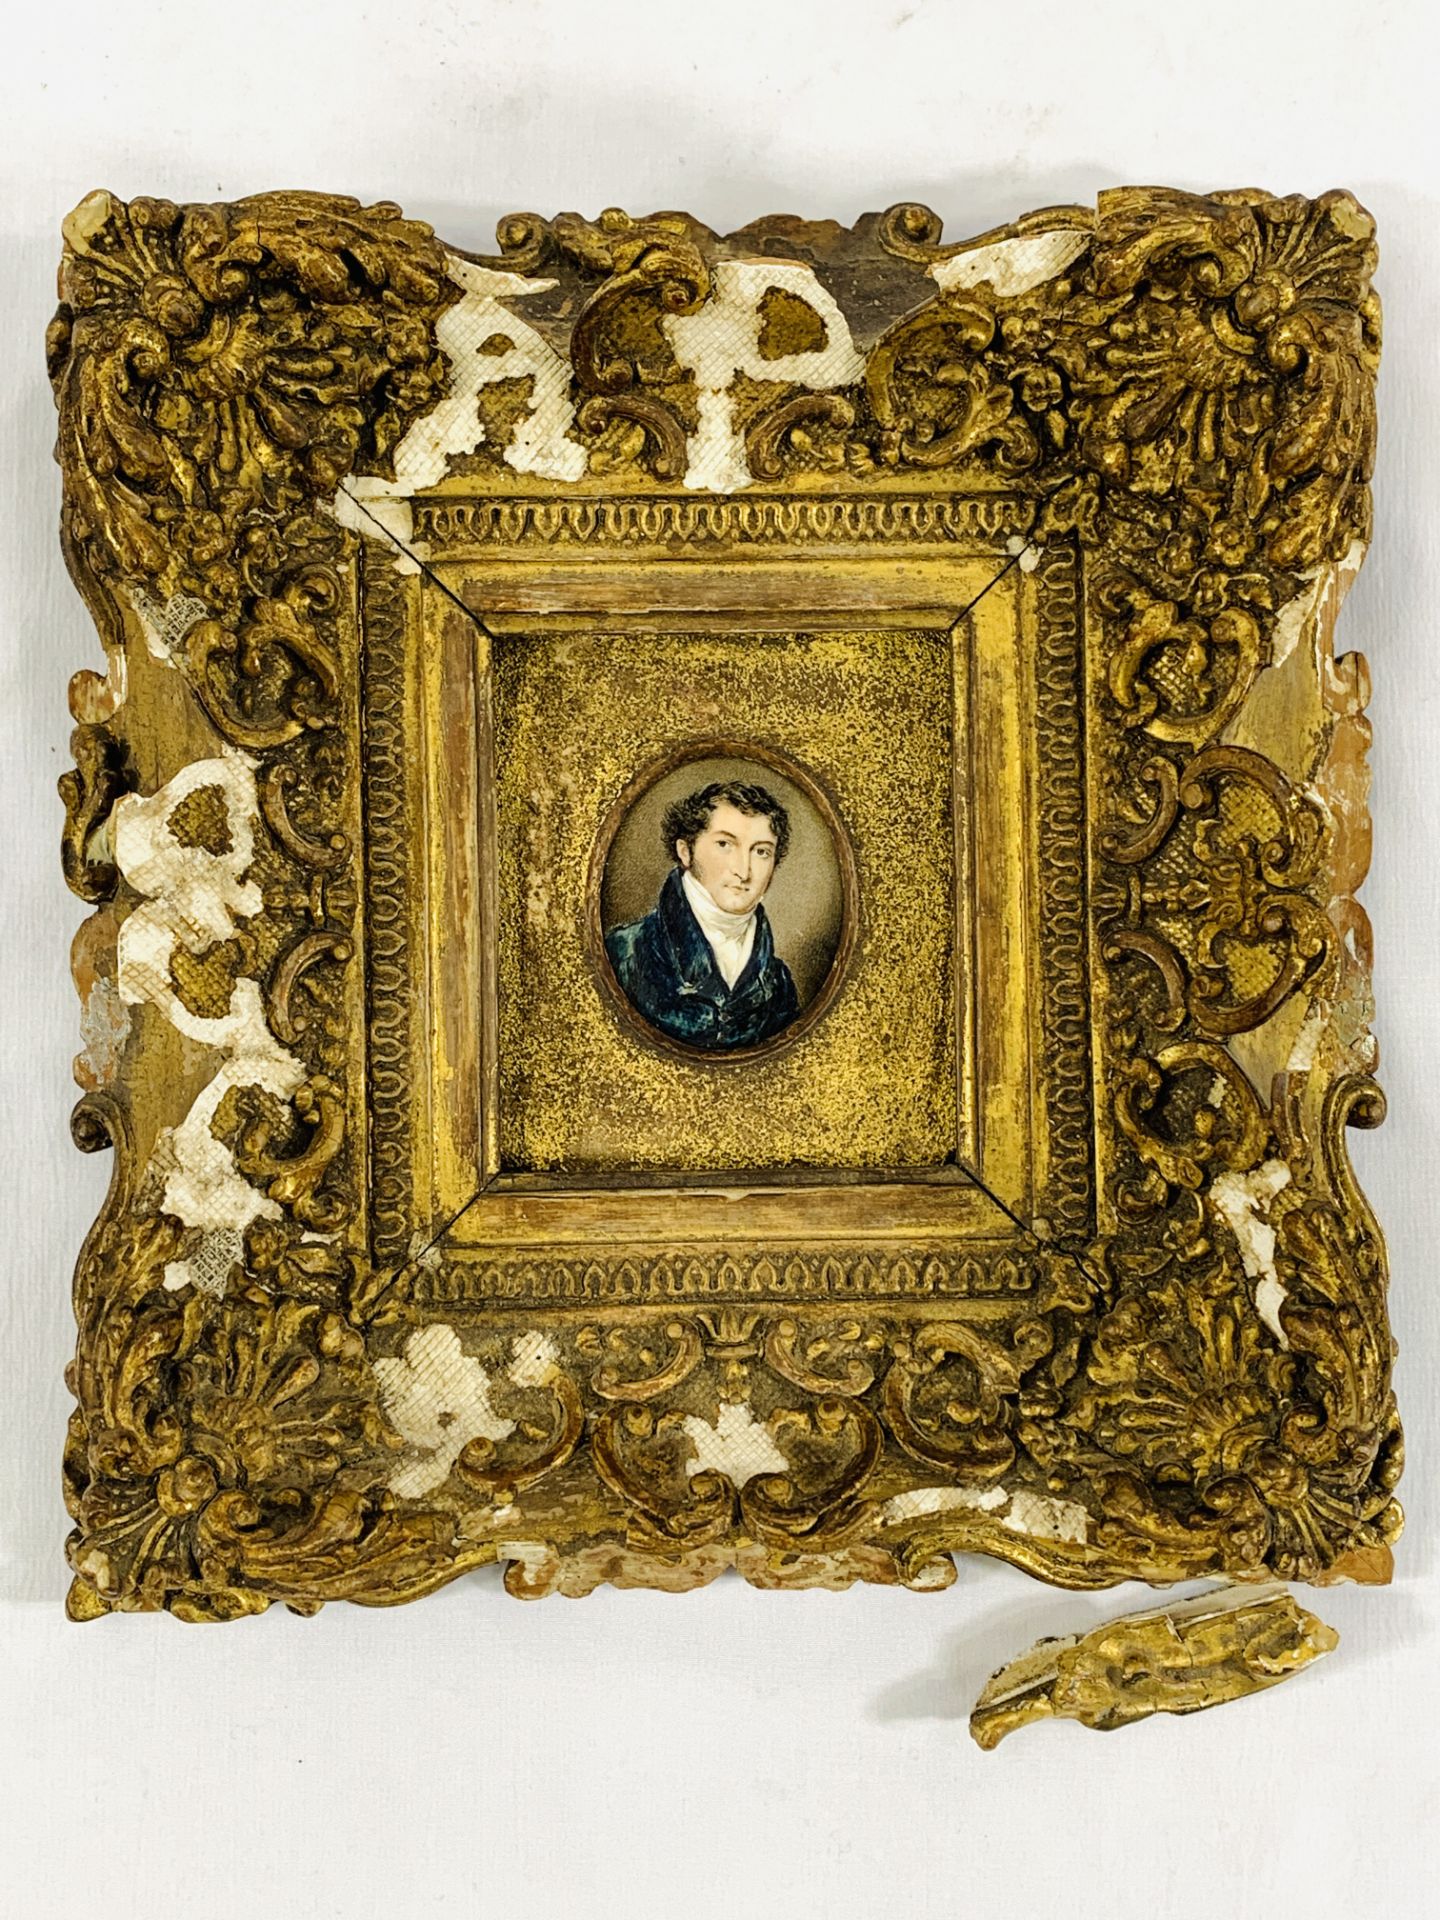 Portrait miniature in a gilt frame